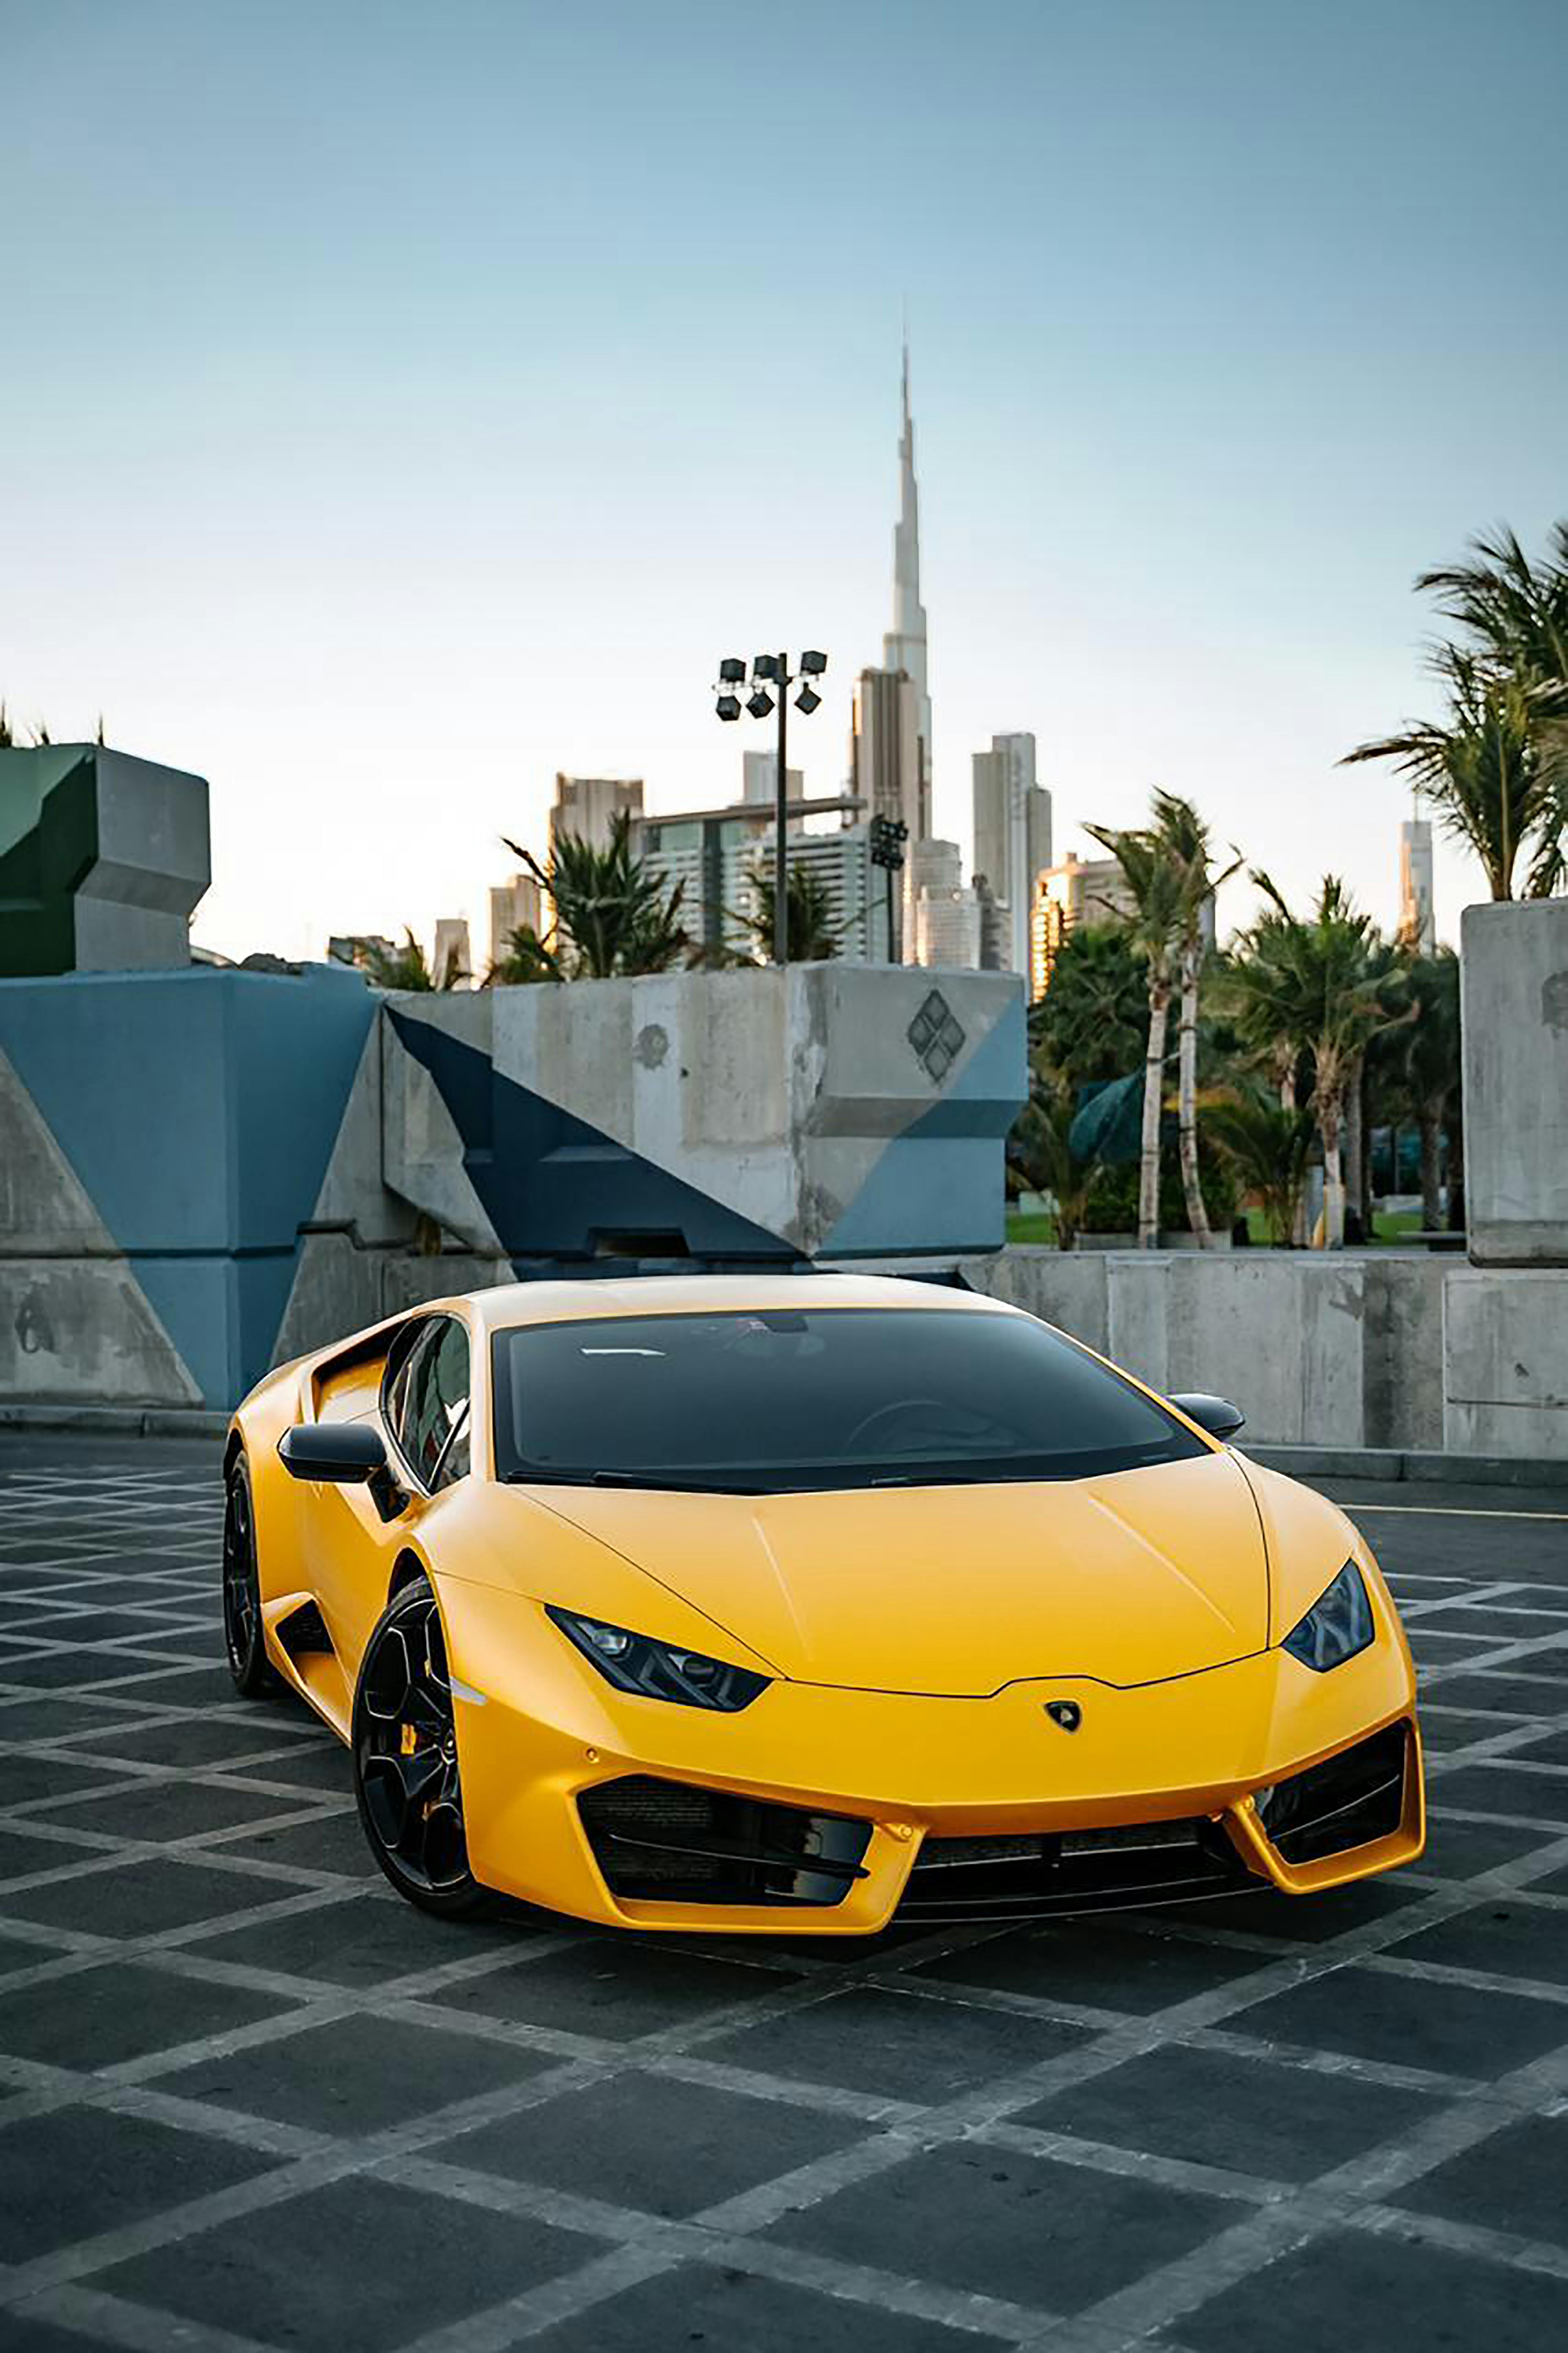 Lamborghini Photos, Download The BEST Free Lamborghini Stock Photos & HD  Images